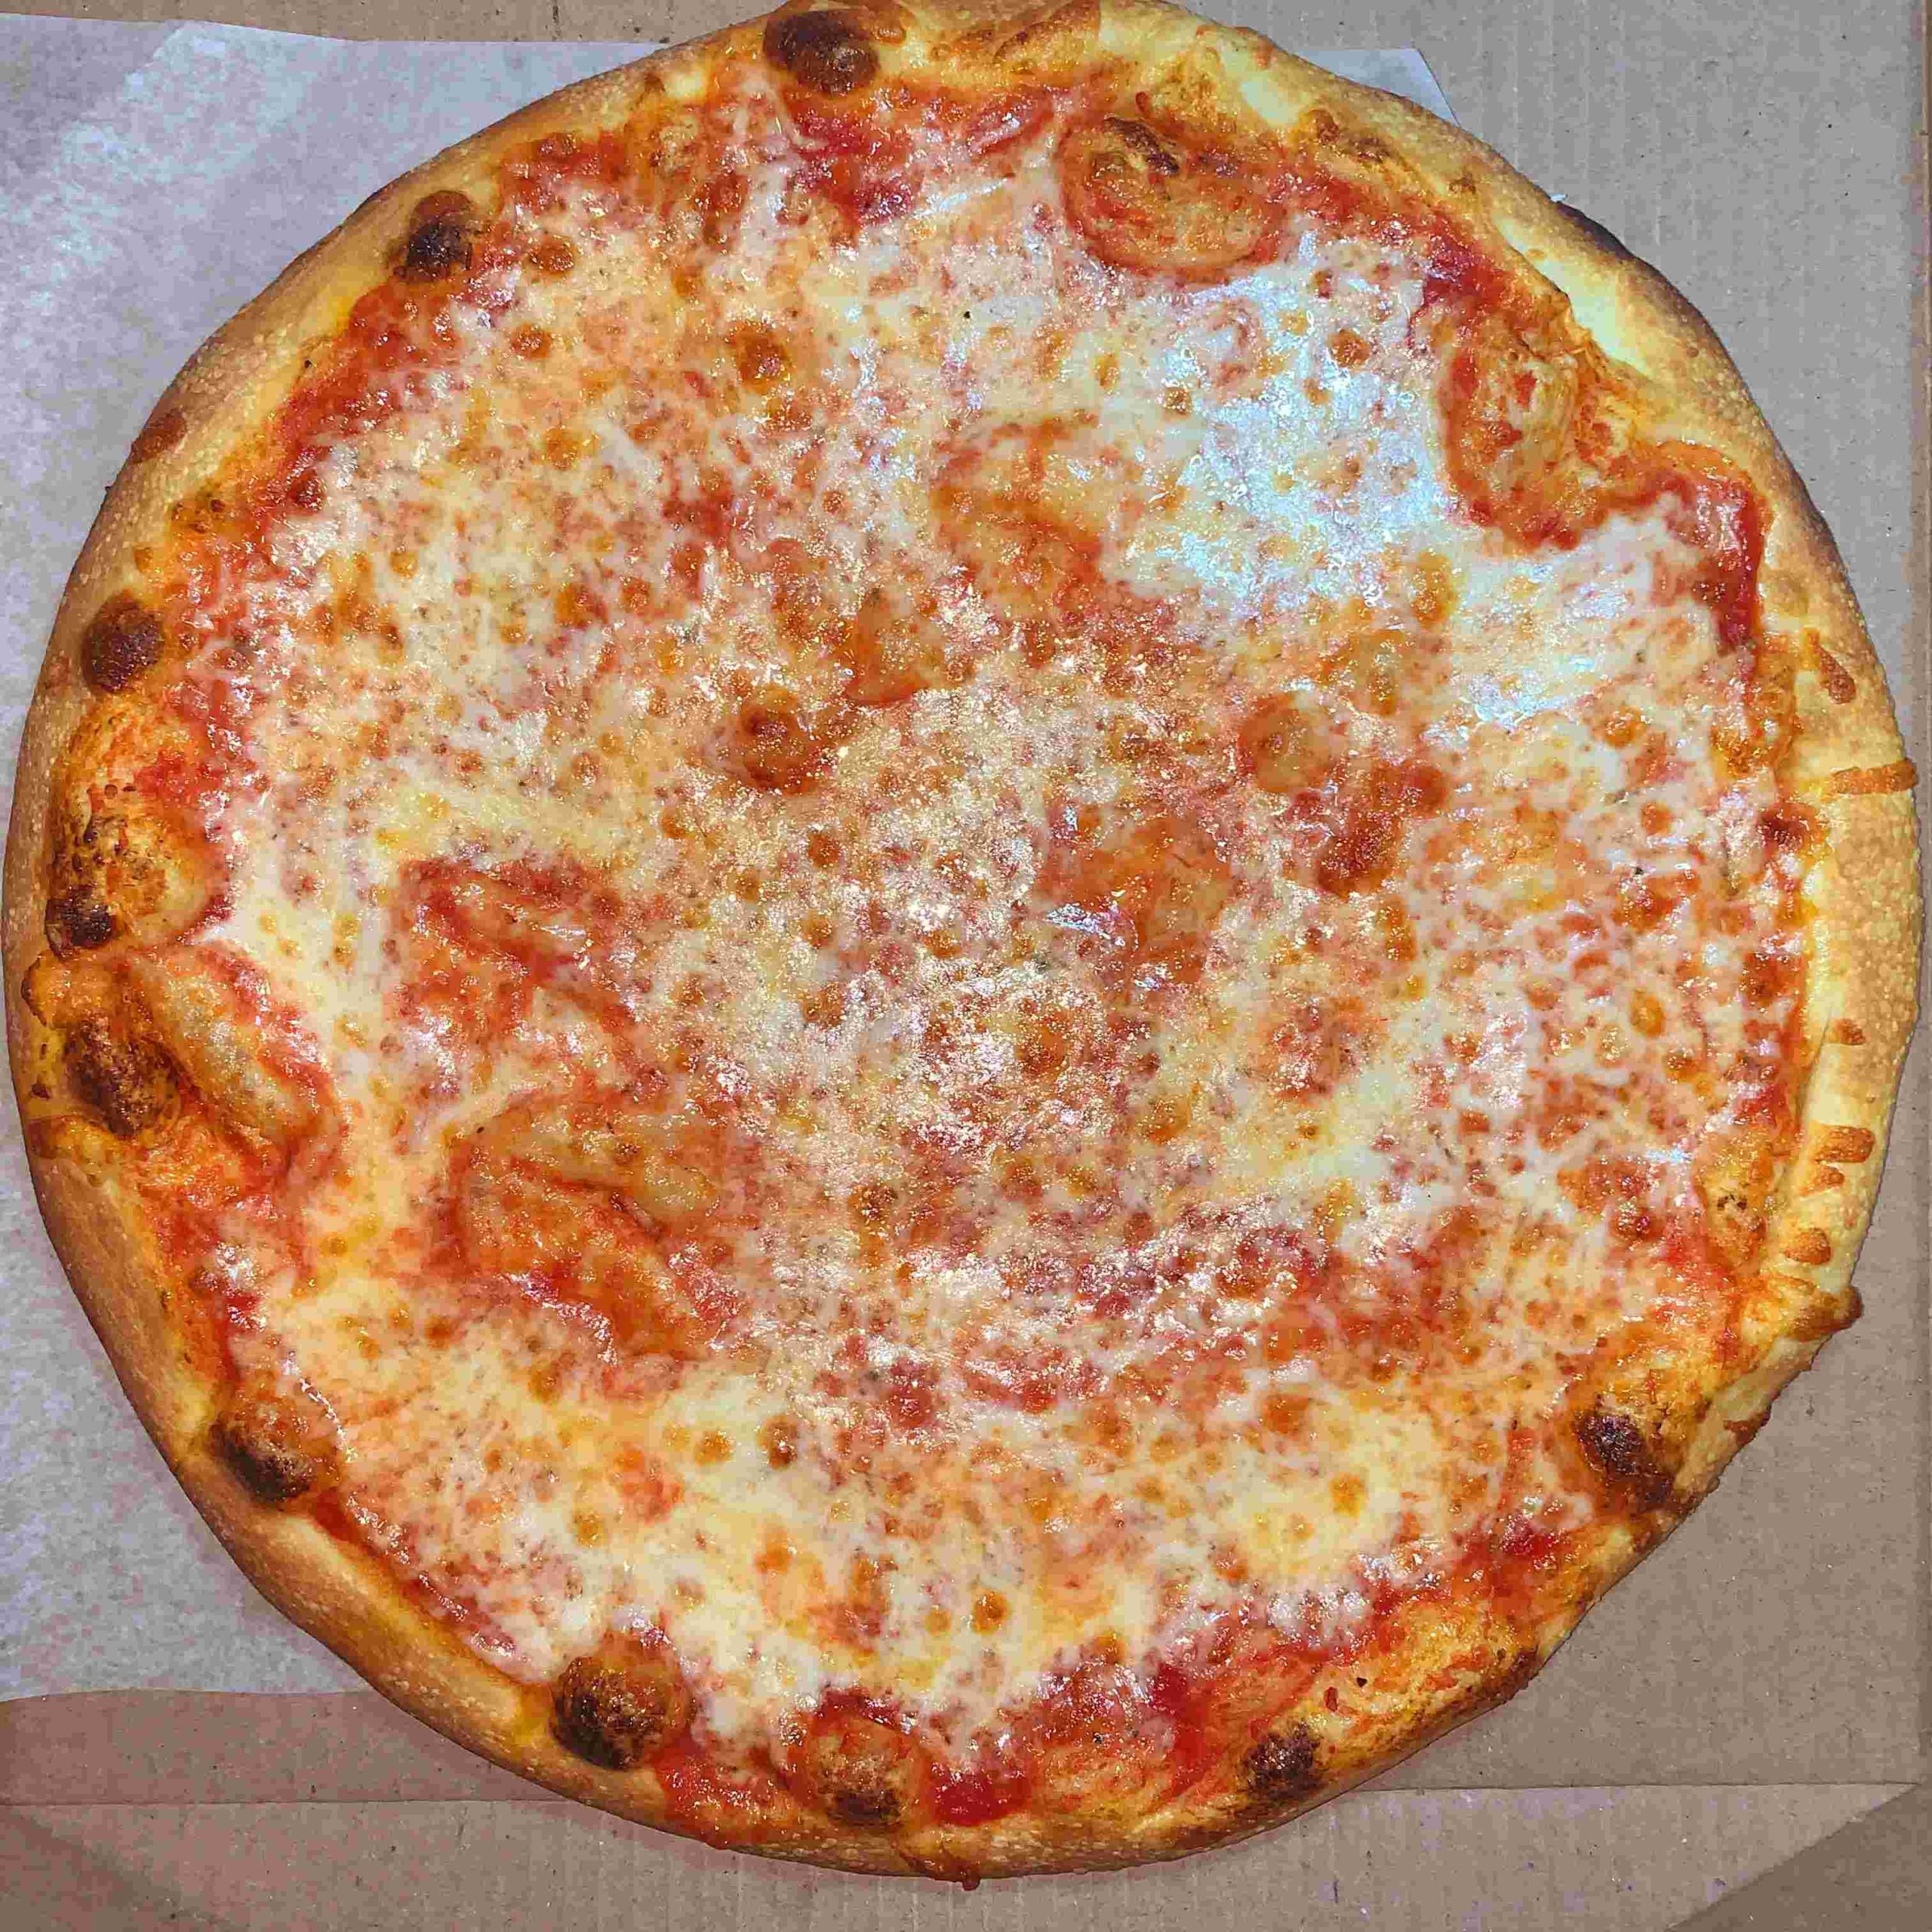 A vegan cheese pizza.